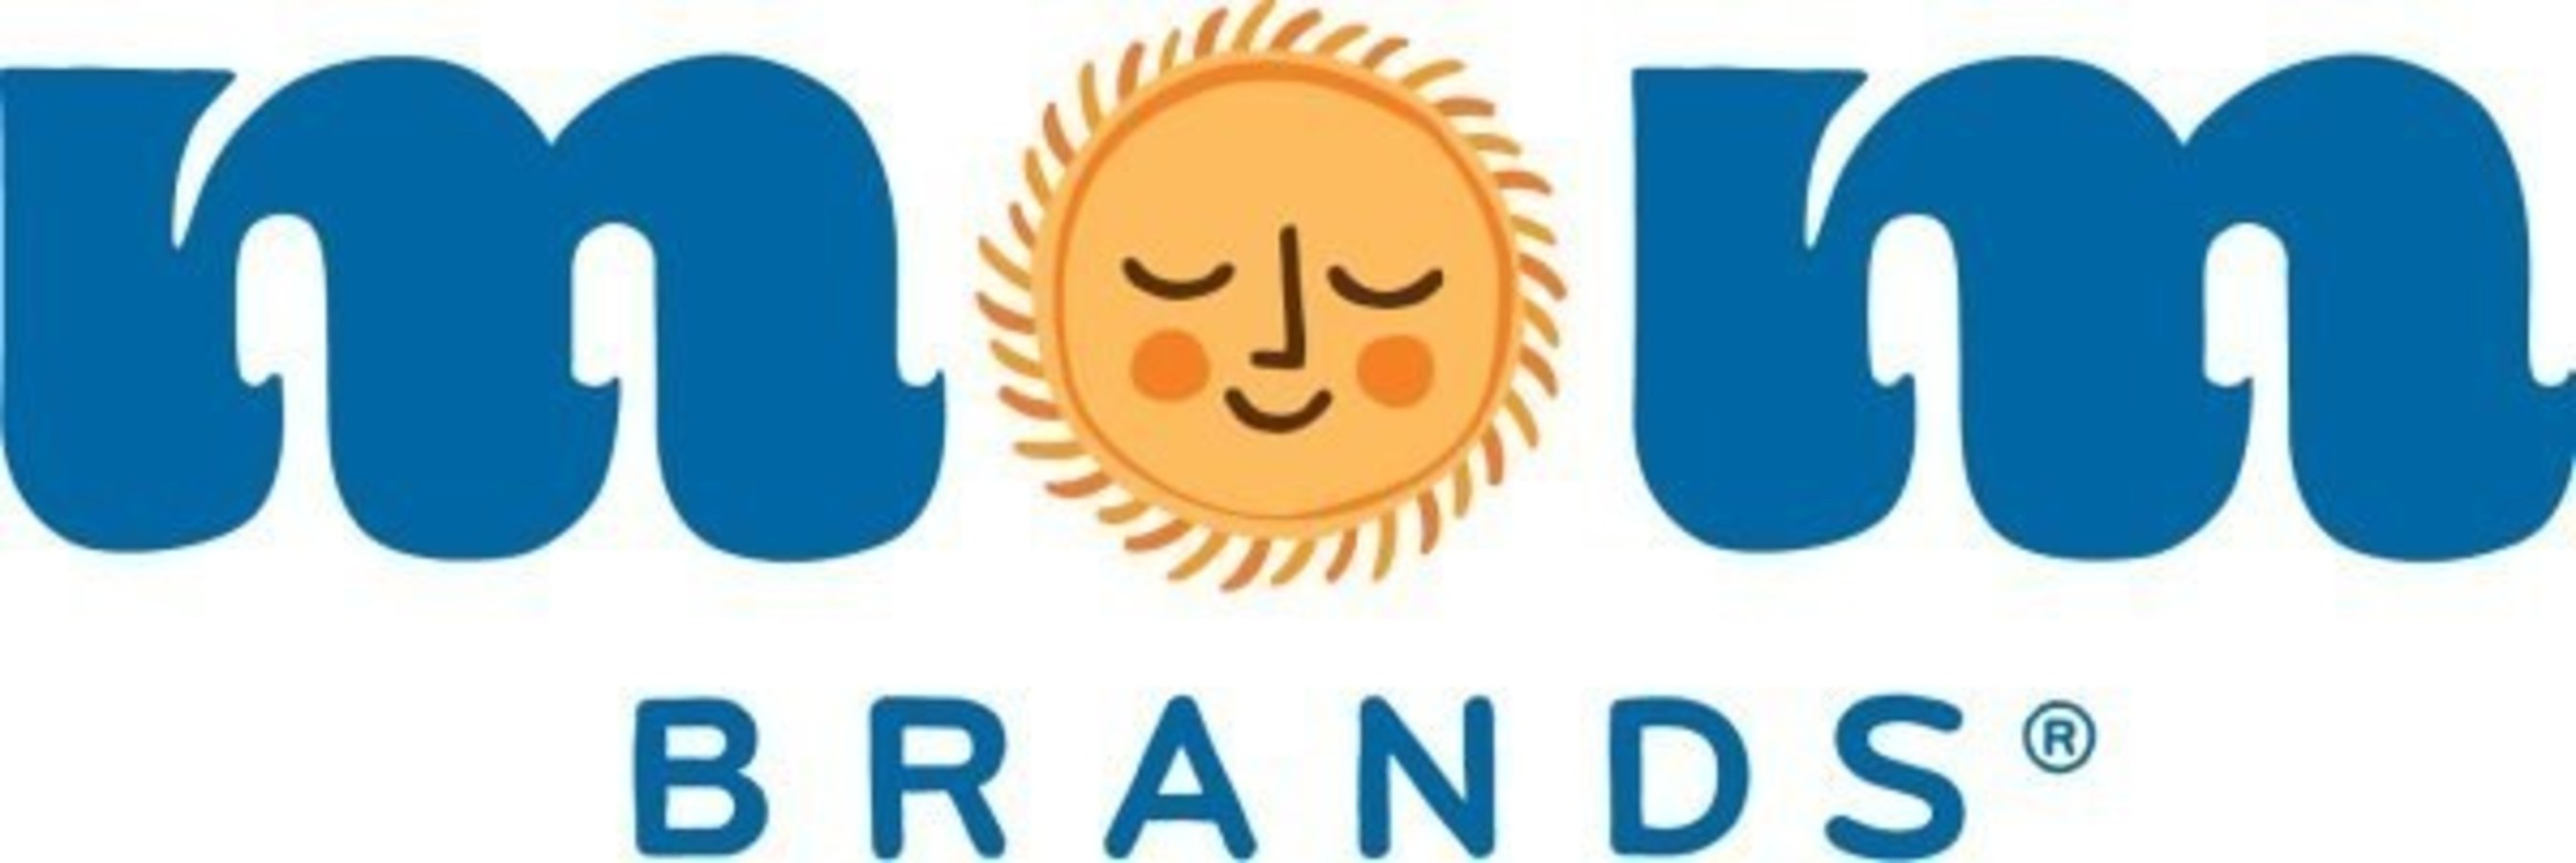 MOM Brands(R) logo. (PRNewsFoto/MOM Brands)